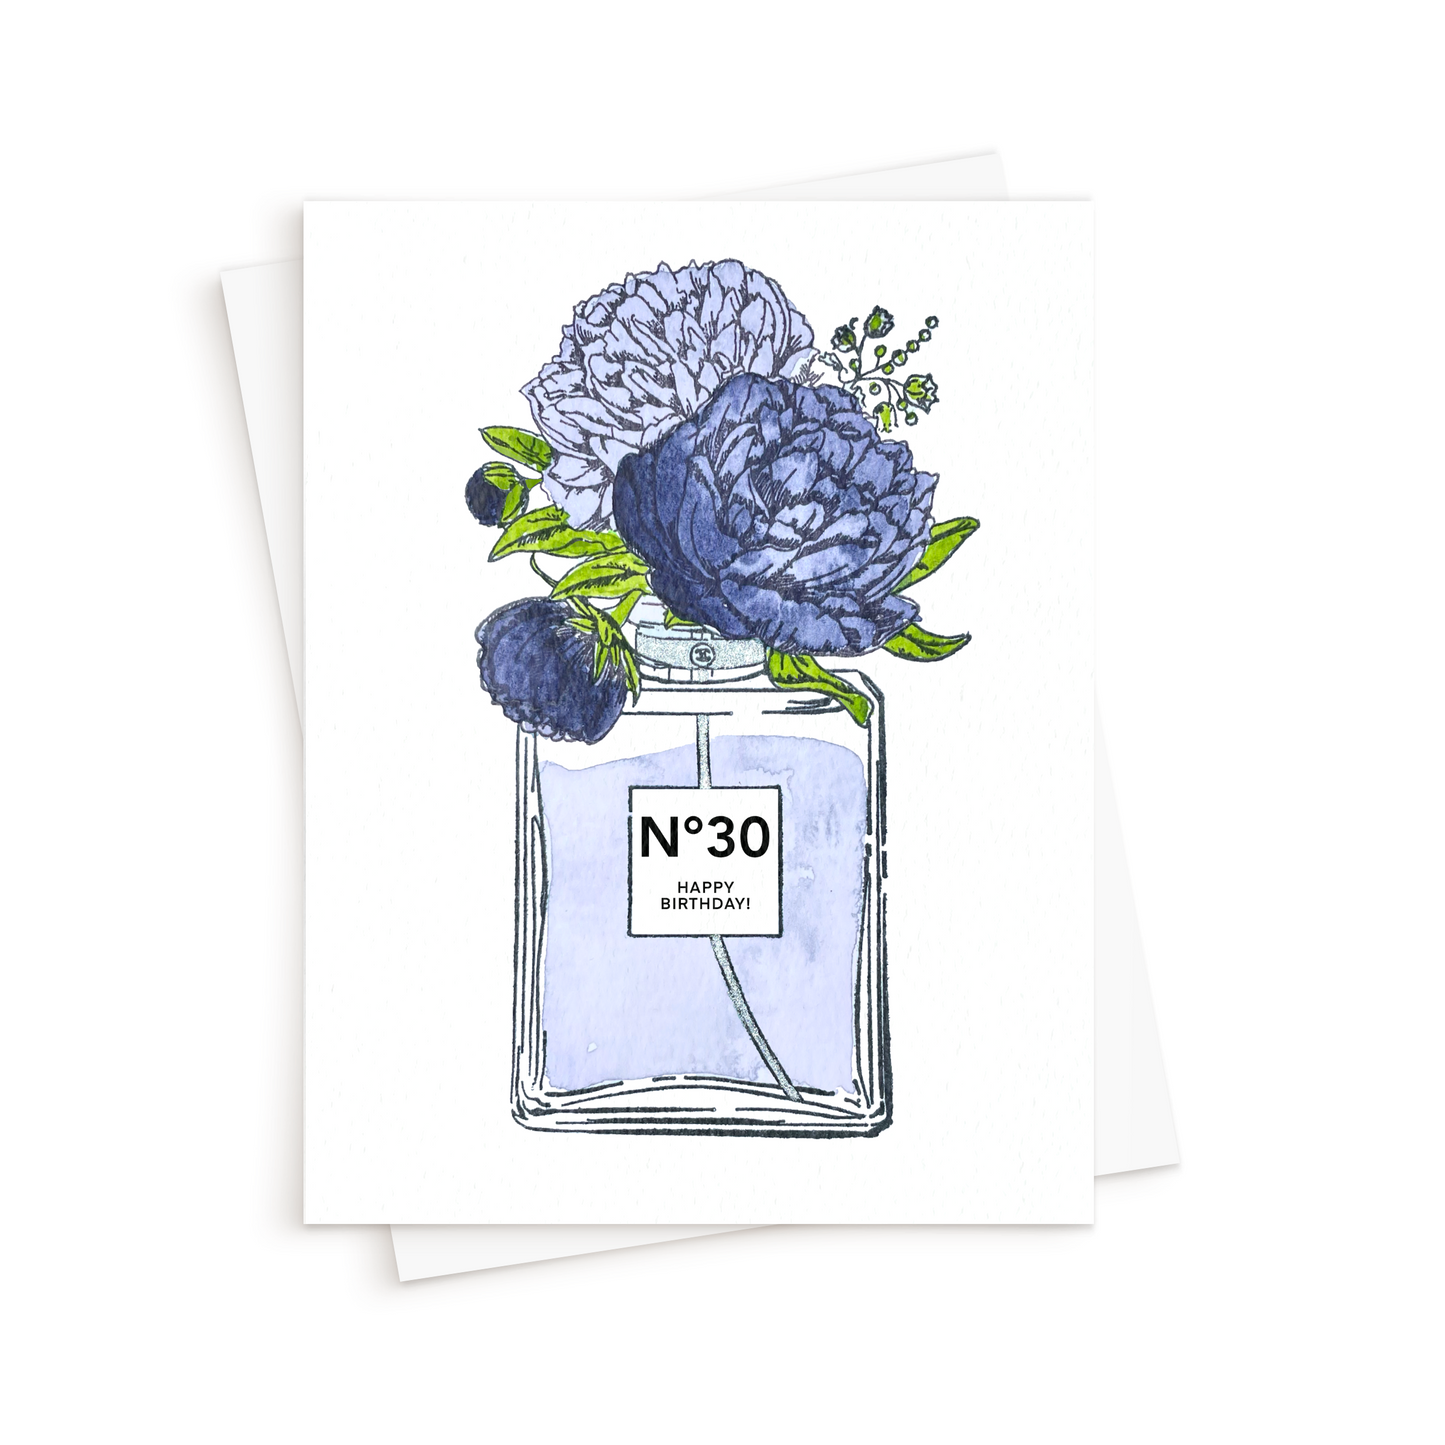 The №5 Perfume Birthday Card